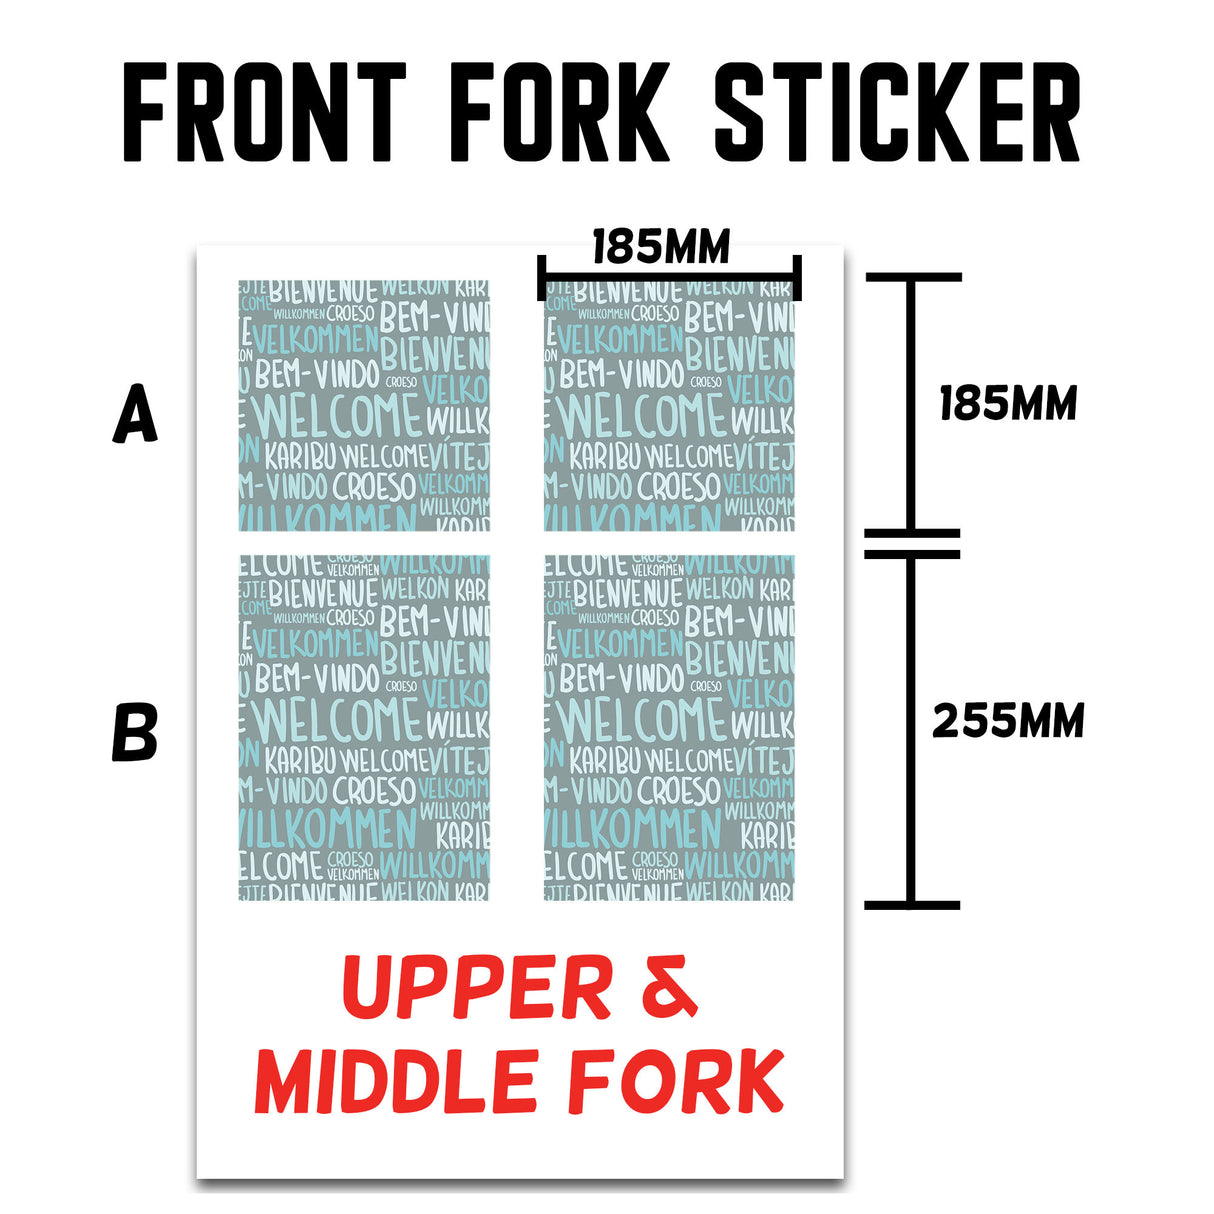 MX Drit Bike Front Fork Wrap Sticker Protection For Honda Yamaha Kawaski Suzuki [TT38 Welcome Text] - StickerBao Wheel Sticker Store